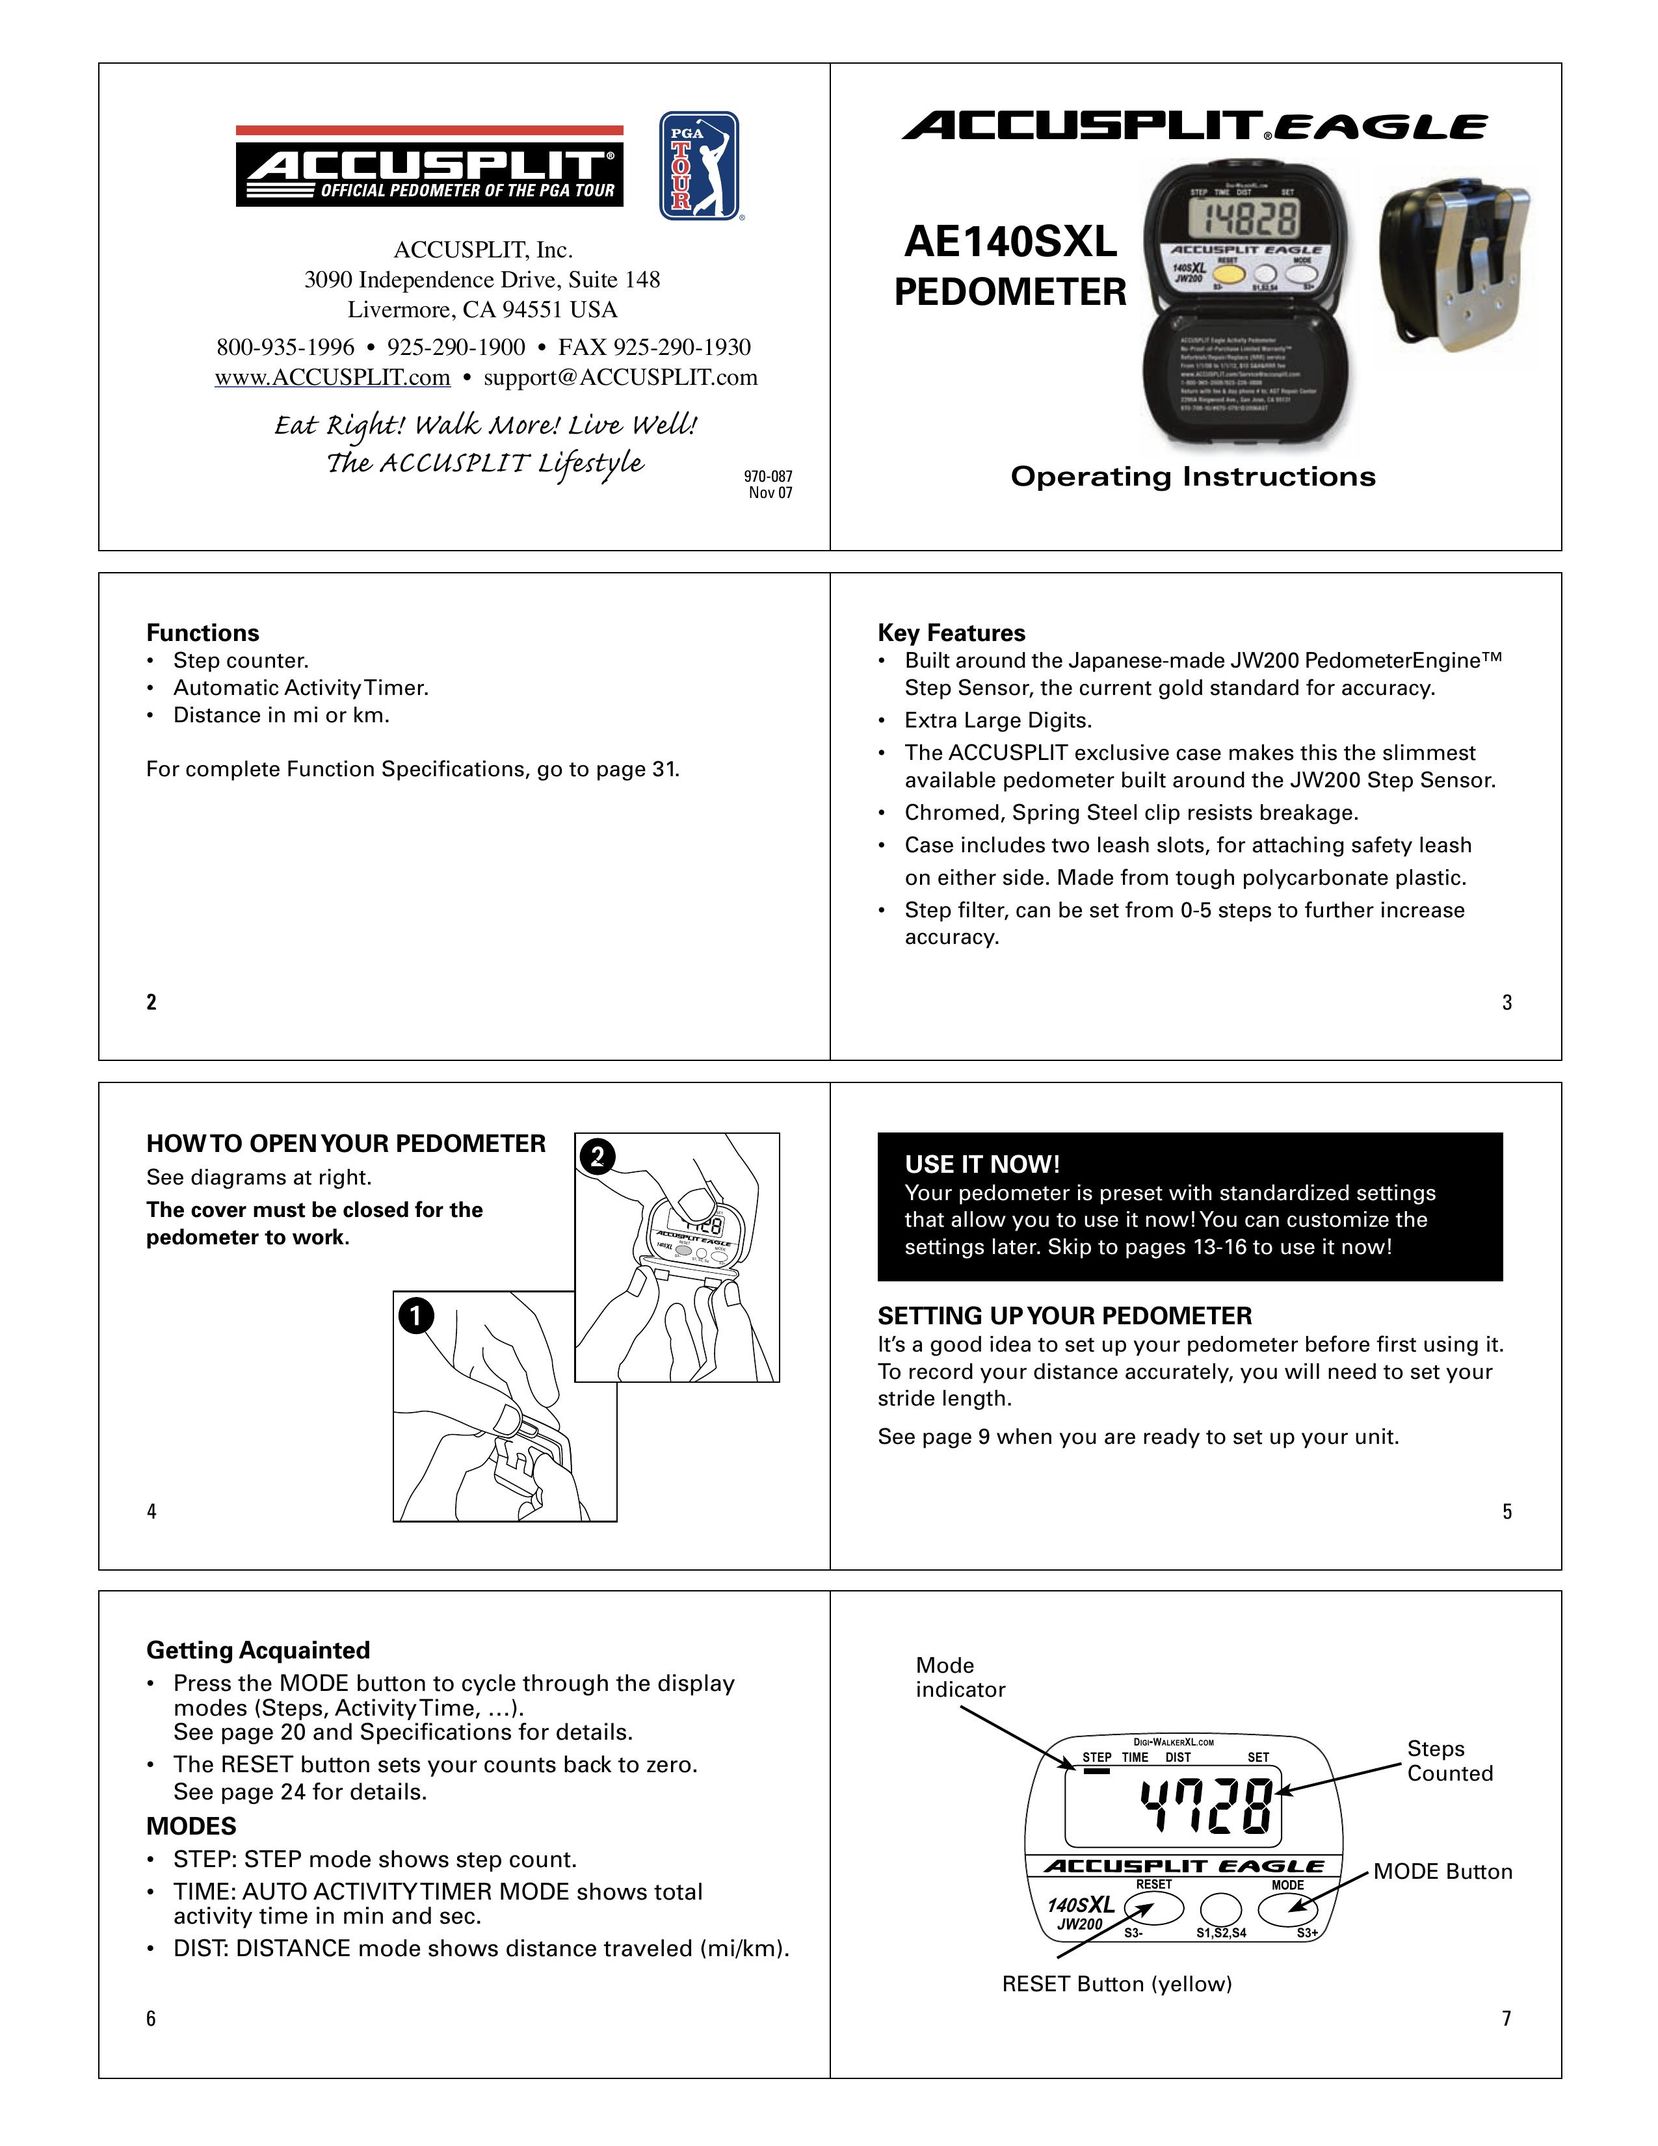 Accusplit AE140SXL Fitness Electronics User Manual